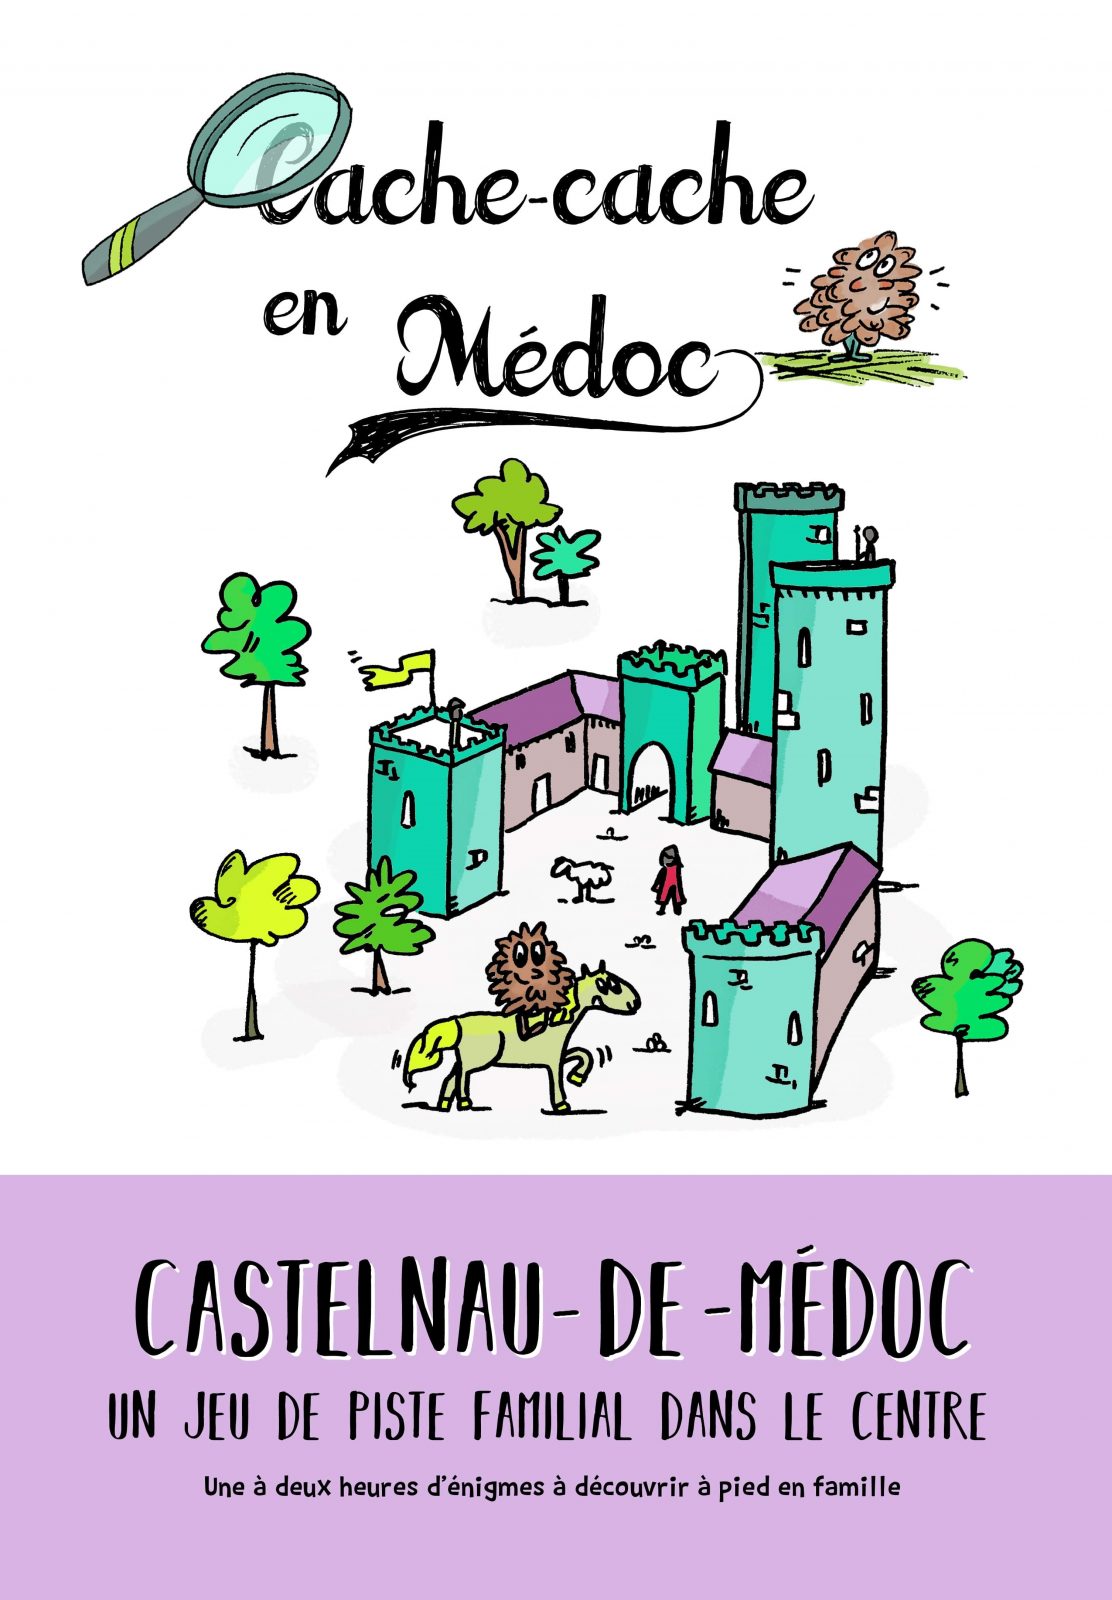 Hide and seek in the Médoc in Castelnau-de-Médoc